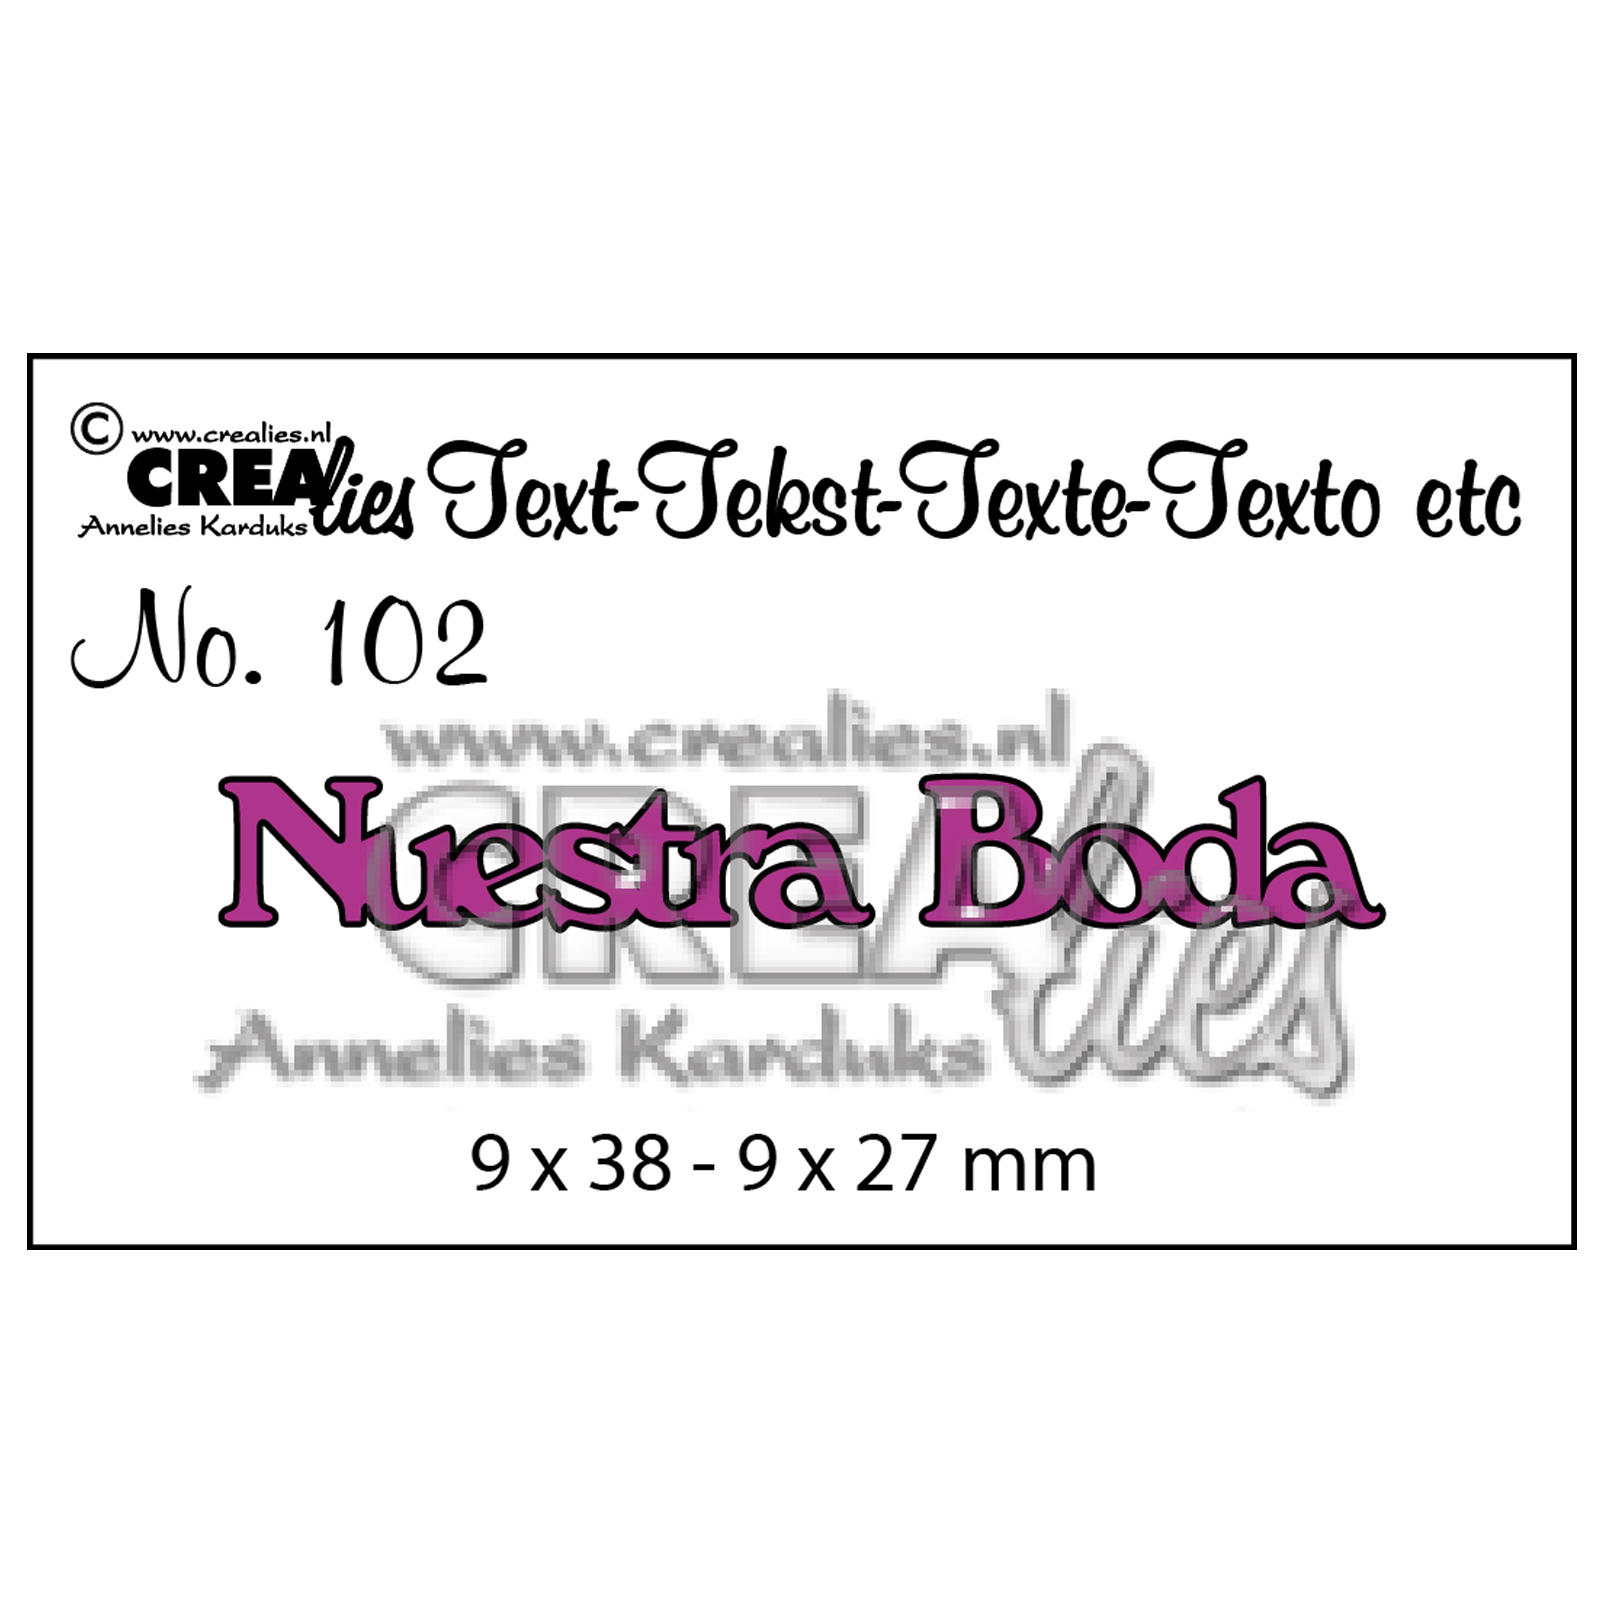 Crealies • Cutting die Spanish text no.102 "Nuestra Boda"